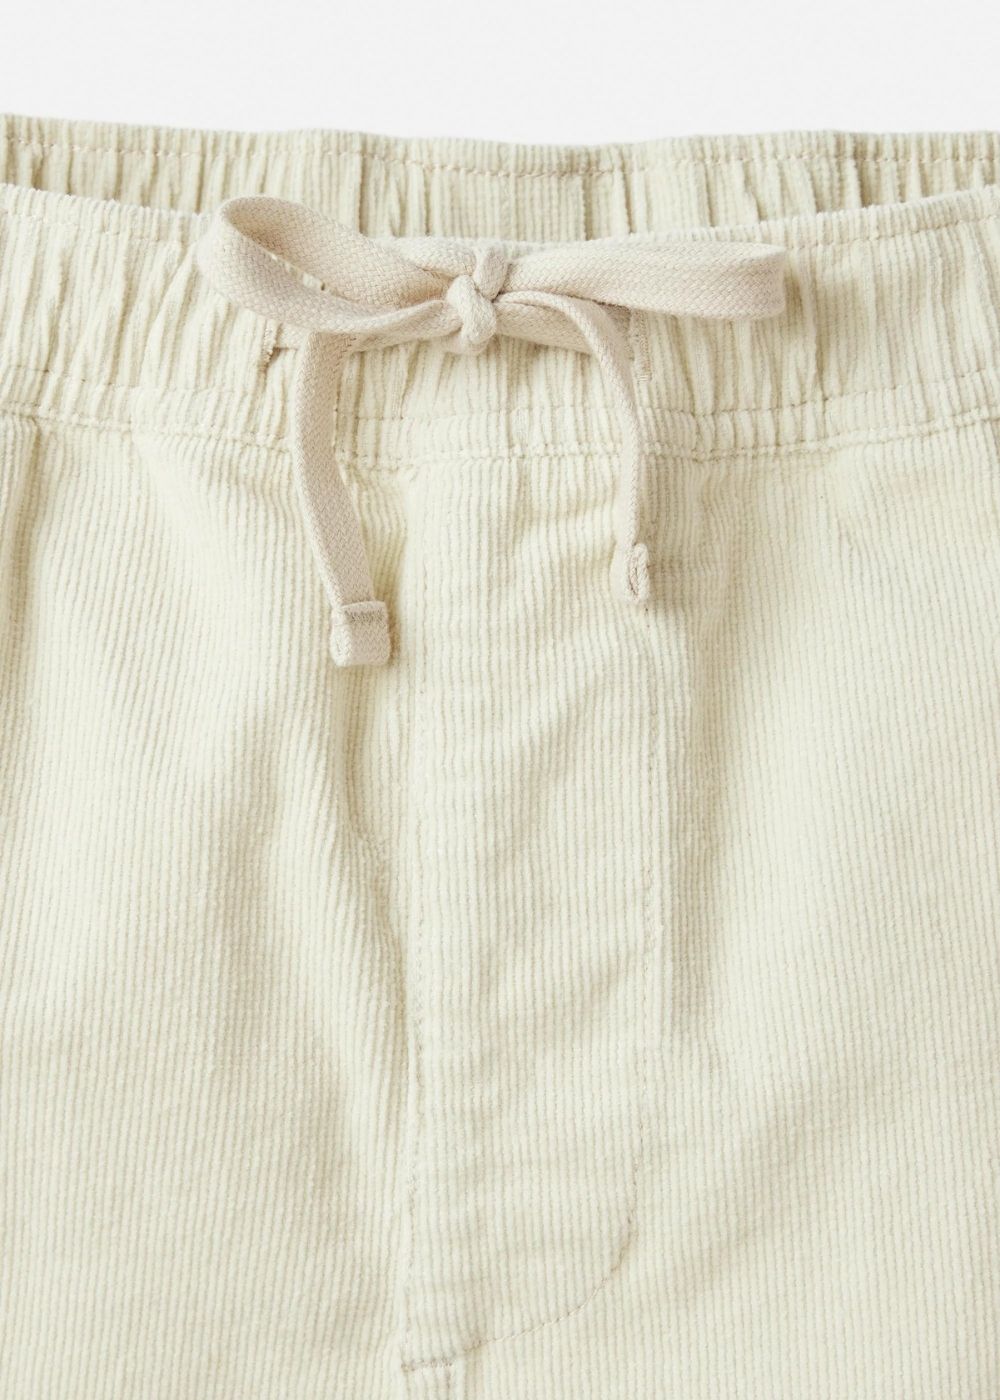 Cord Local Short  -  מכנסי קורדורוי קצרים צבע טבעי